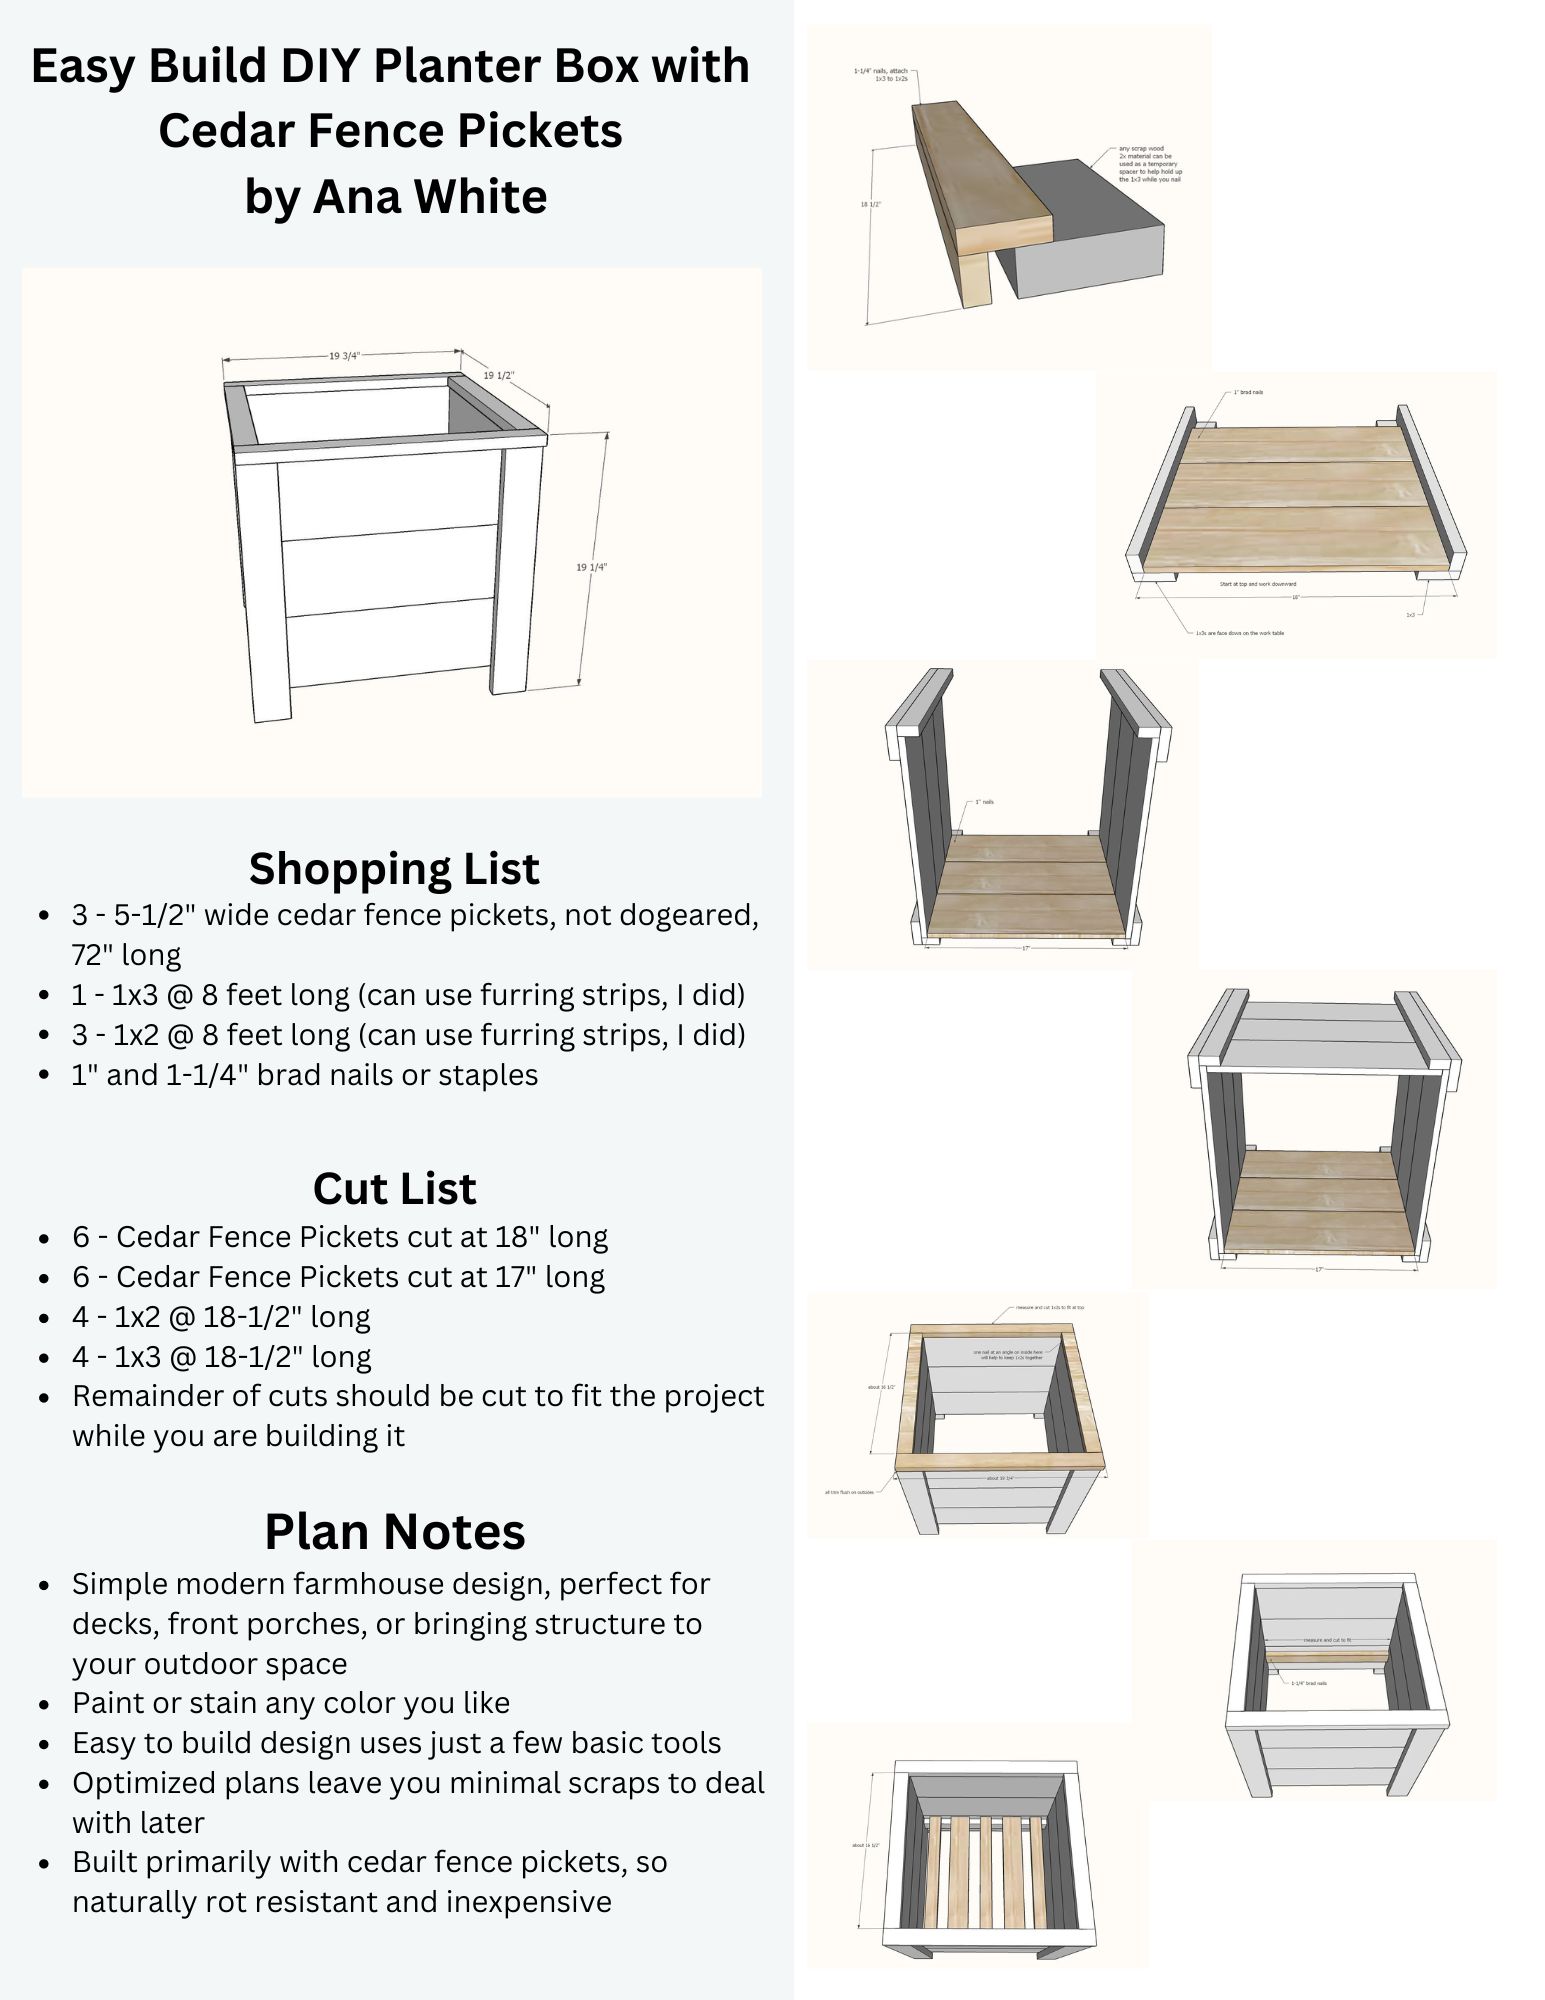 Easy Build DIY Planter Box with Cedar Fence Pickets Plans